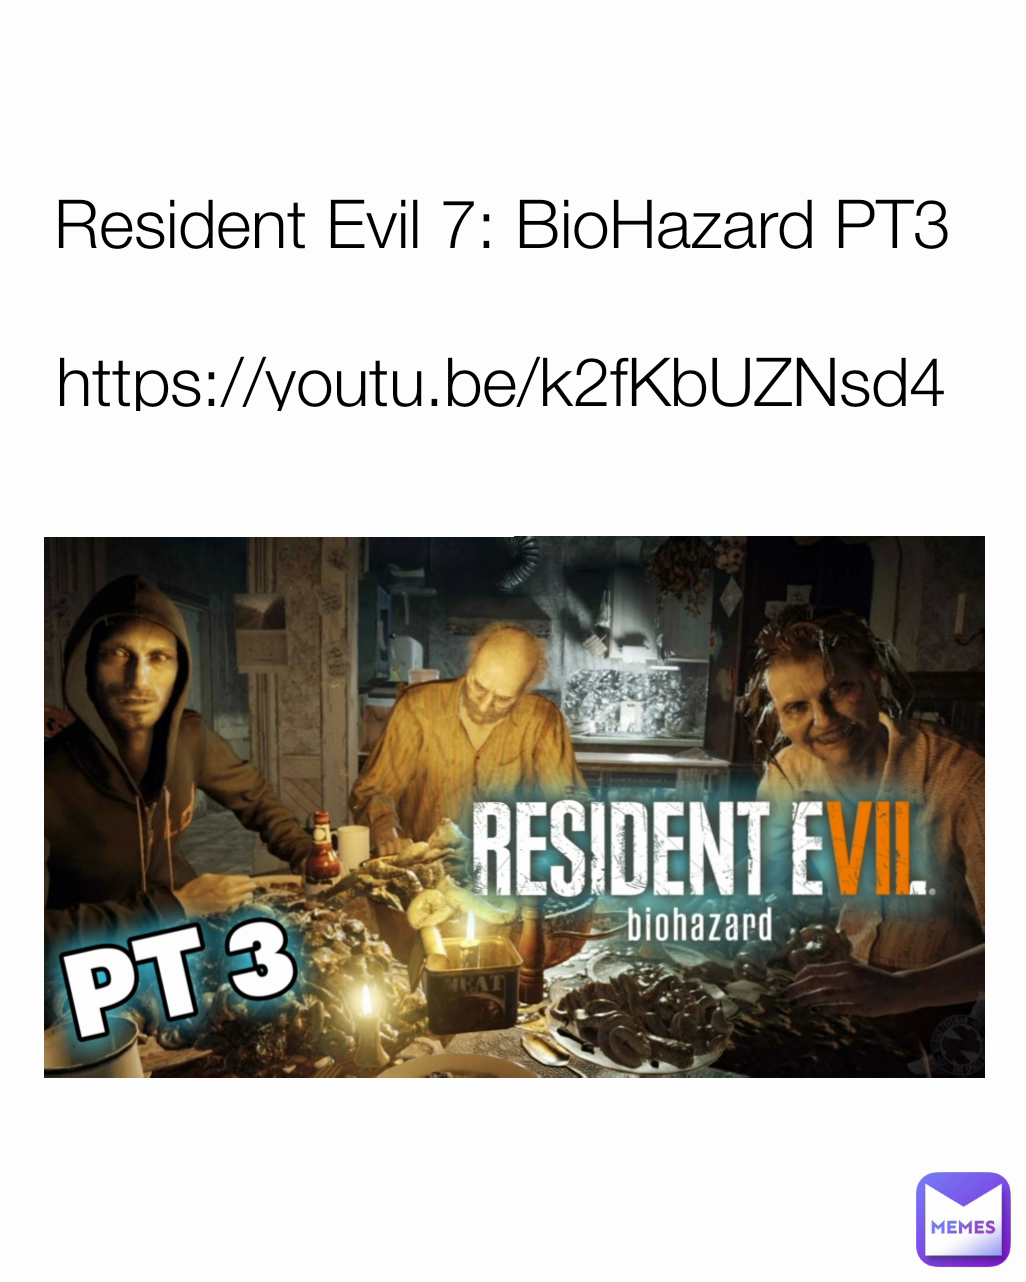 Resident Evil 7: BioHazard PT3

https://youtu.be/k2fKbUZNsd4